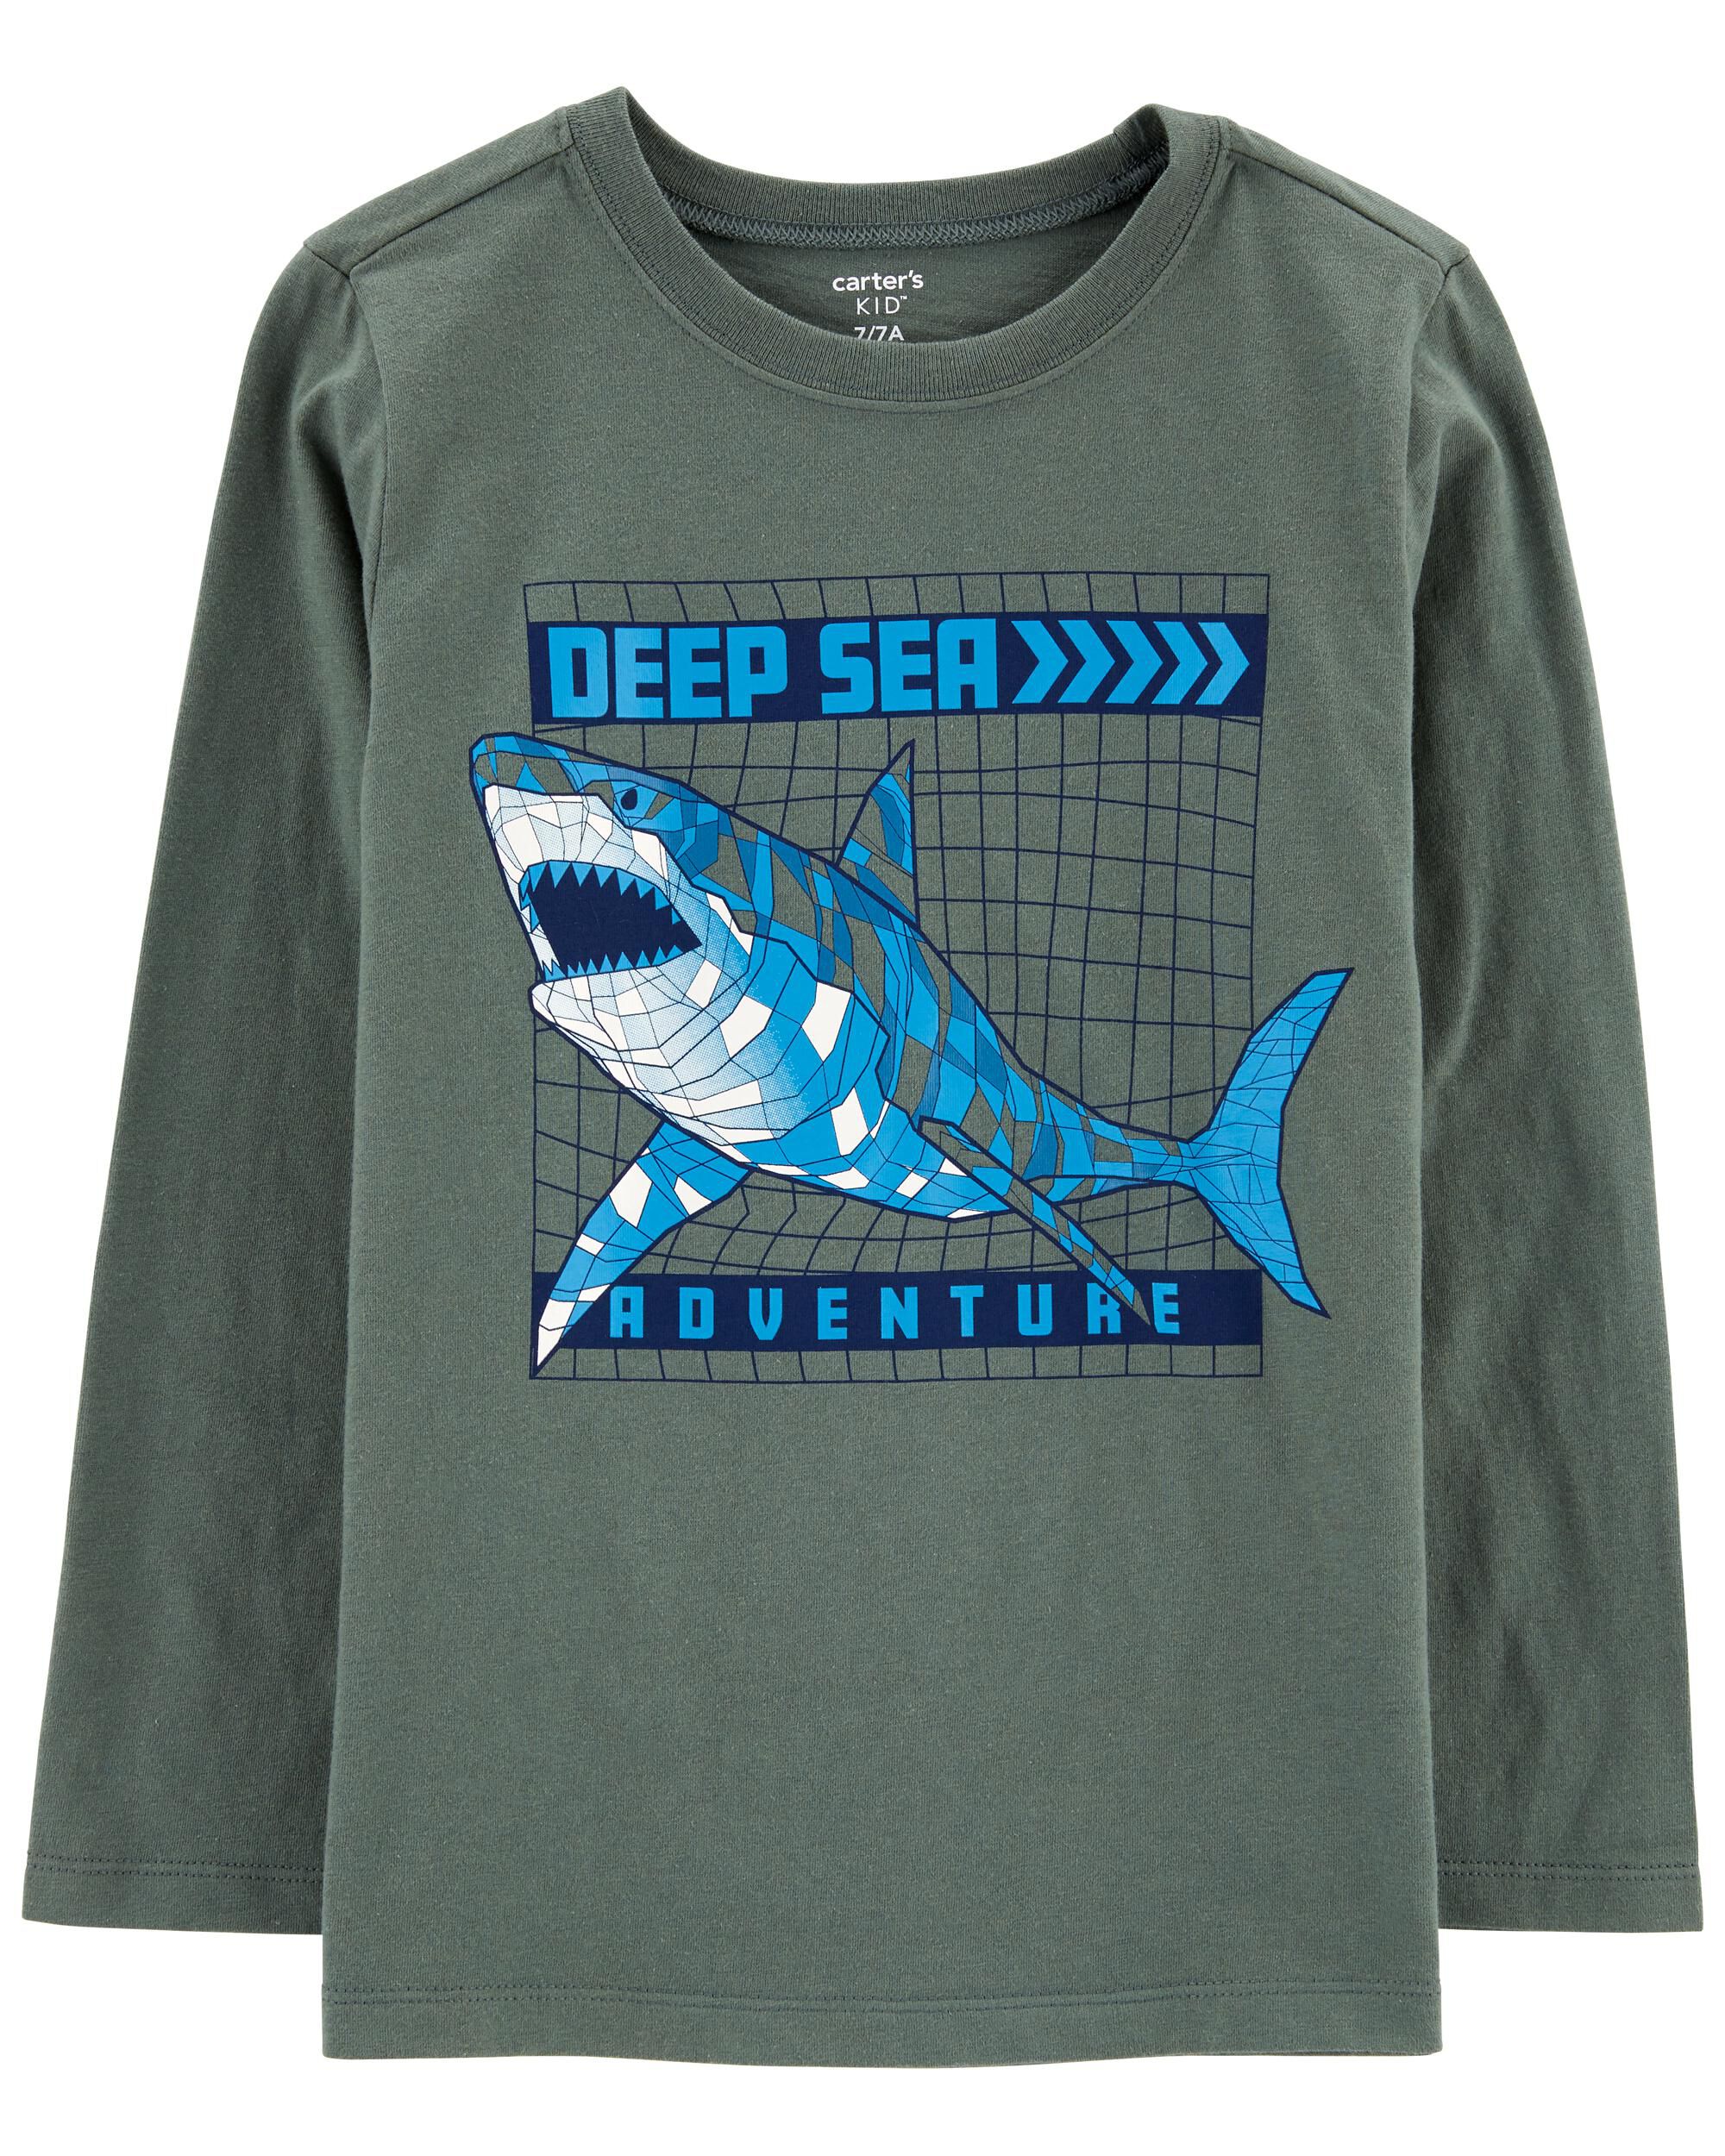 Carters Kid Deep Sea Adventure Shark Jersey Tee